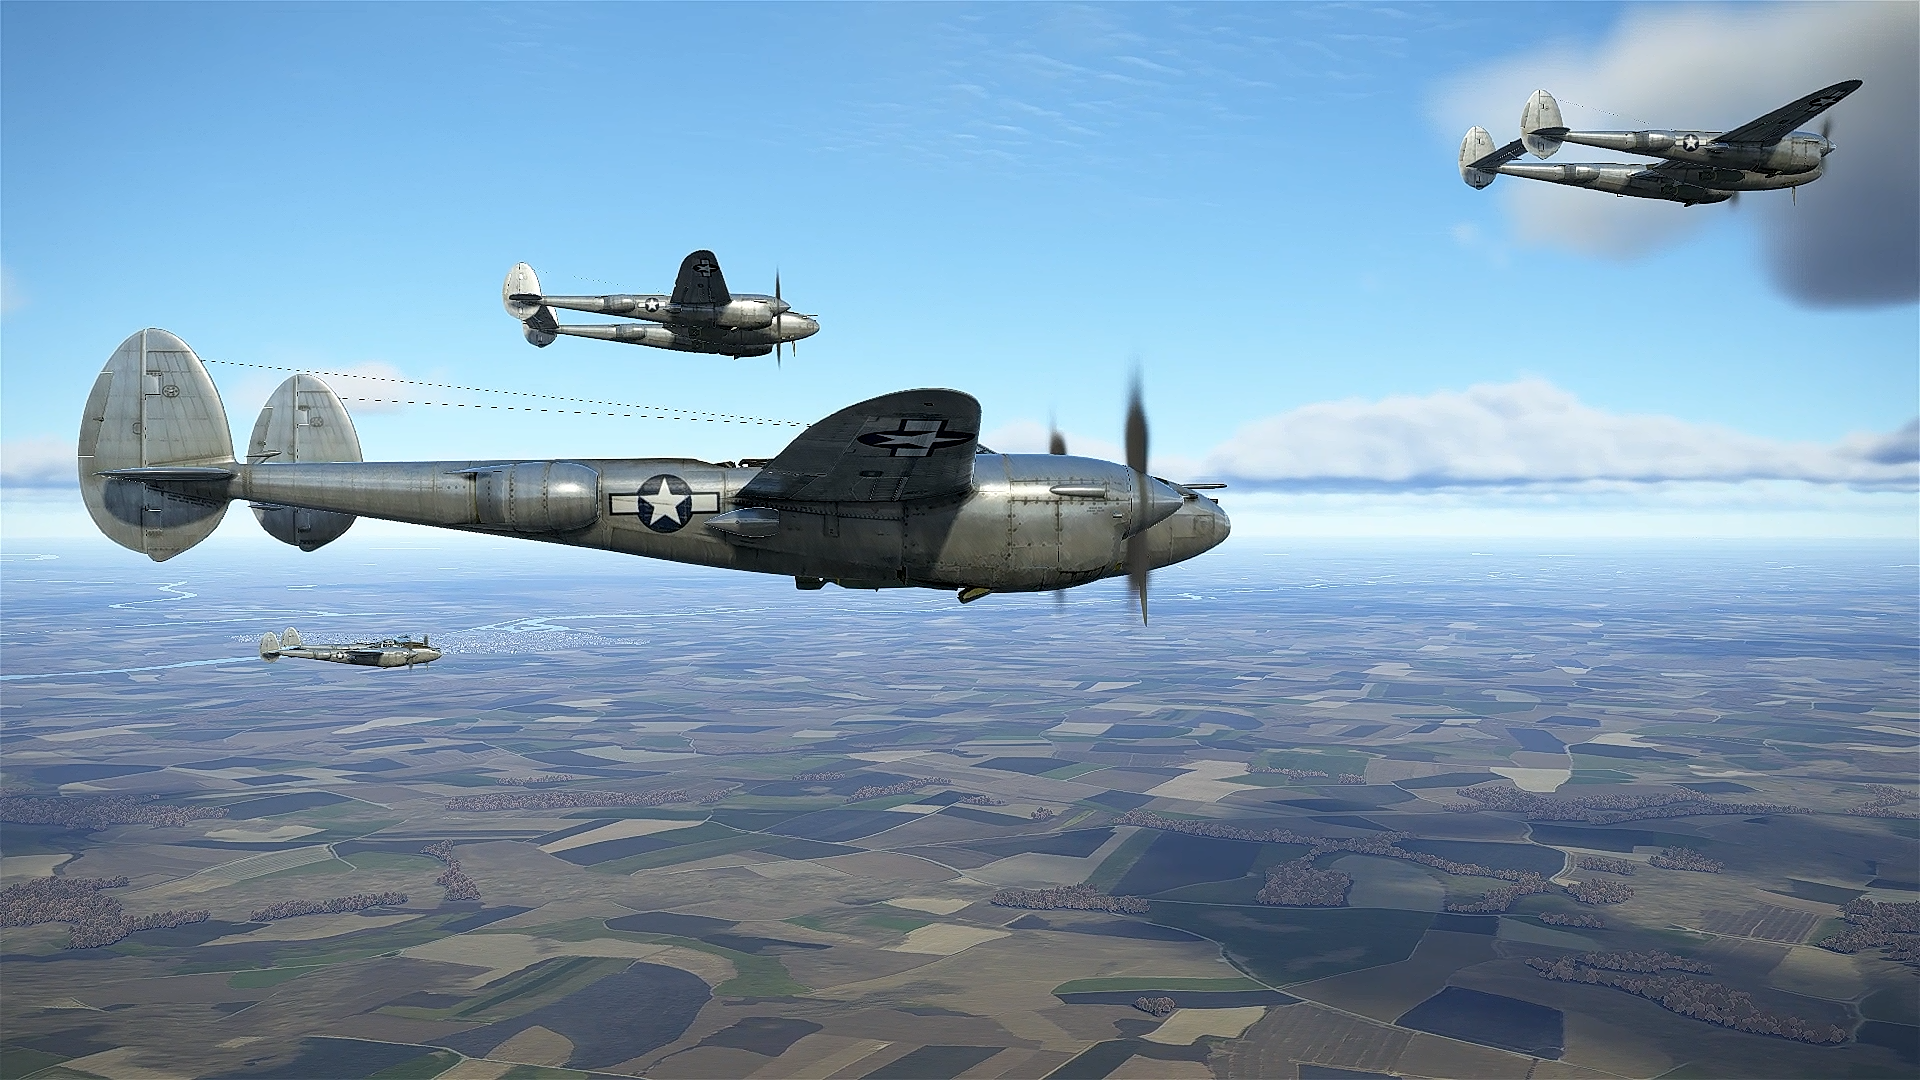 Истребители  P-38 идут на работу. Симулятор "IL-2 Sturmovik Great Battles".